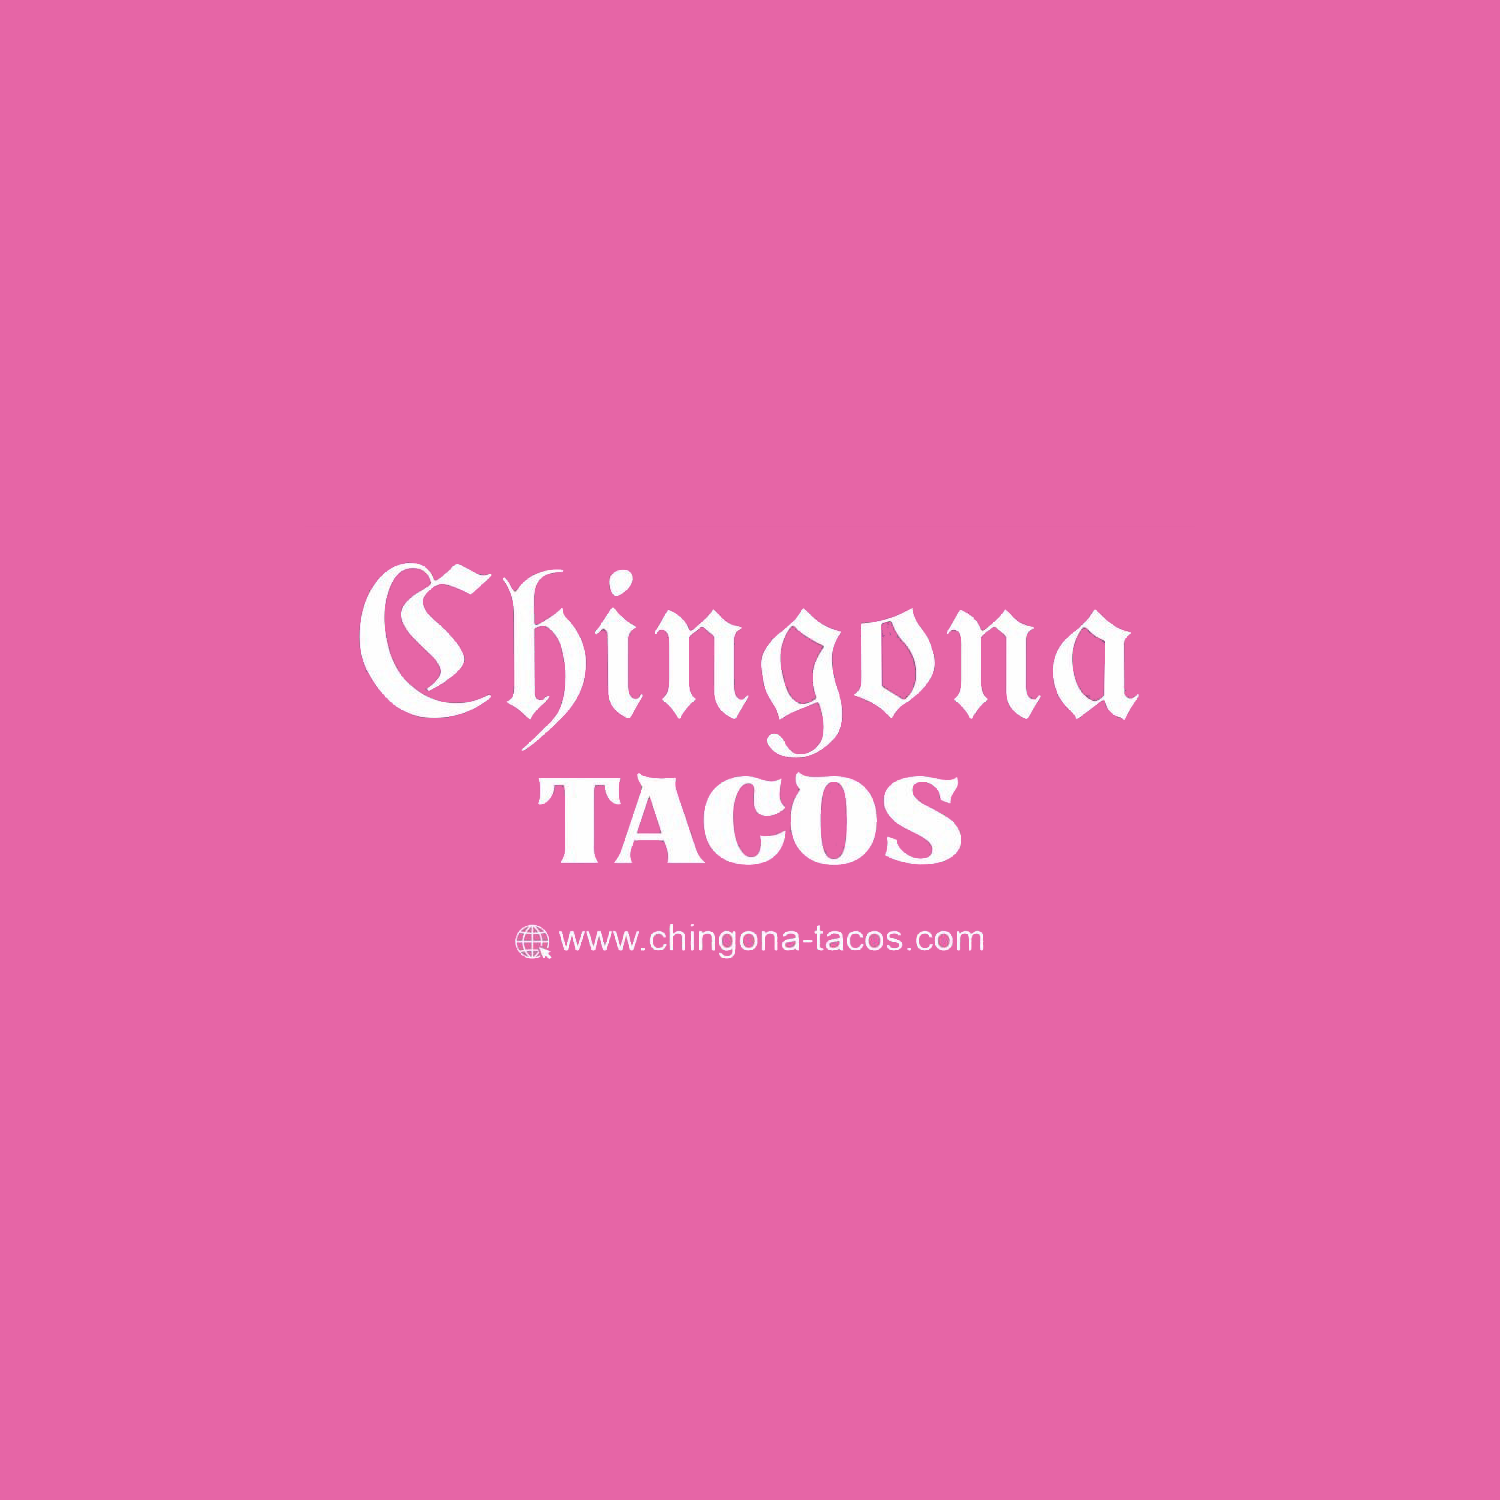 A photo of the Chingona Tacos logo 